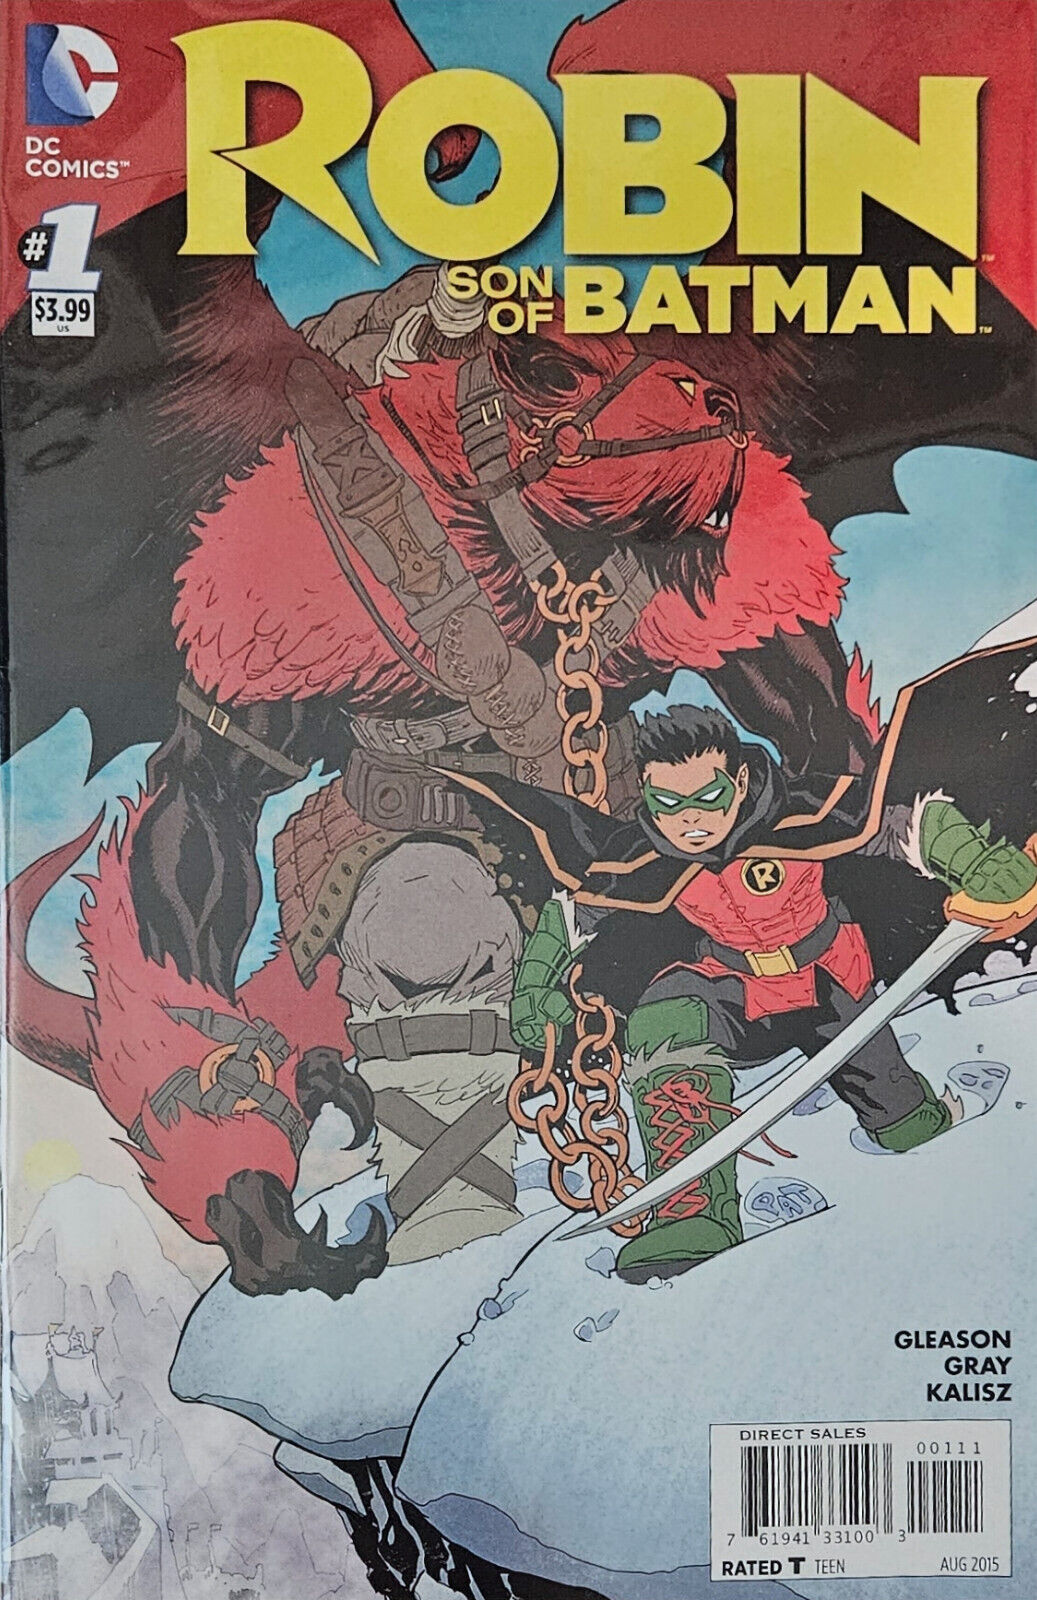 DC Comics ROBIN SON OF BATMAN #1 (2015) LN